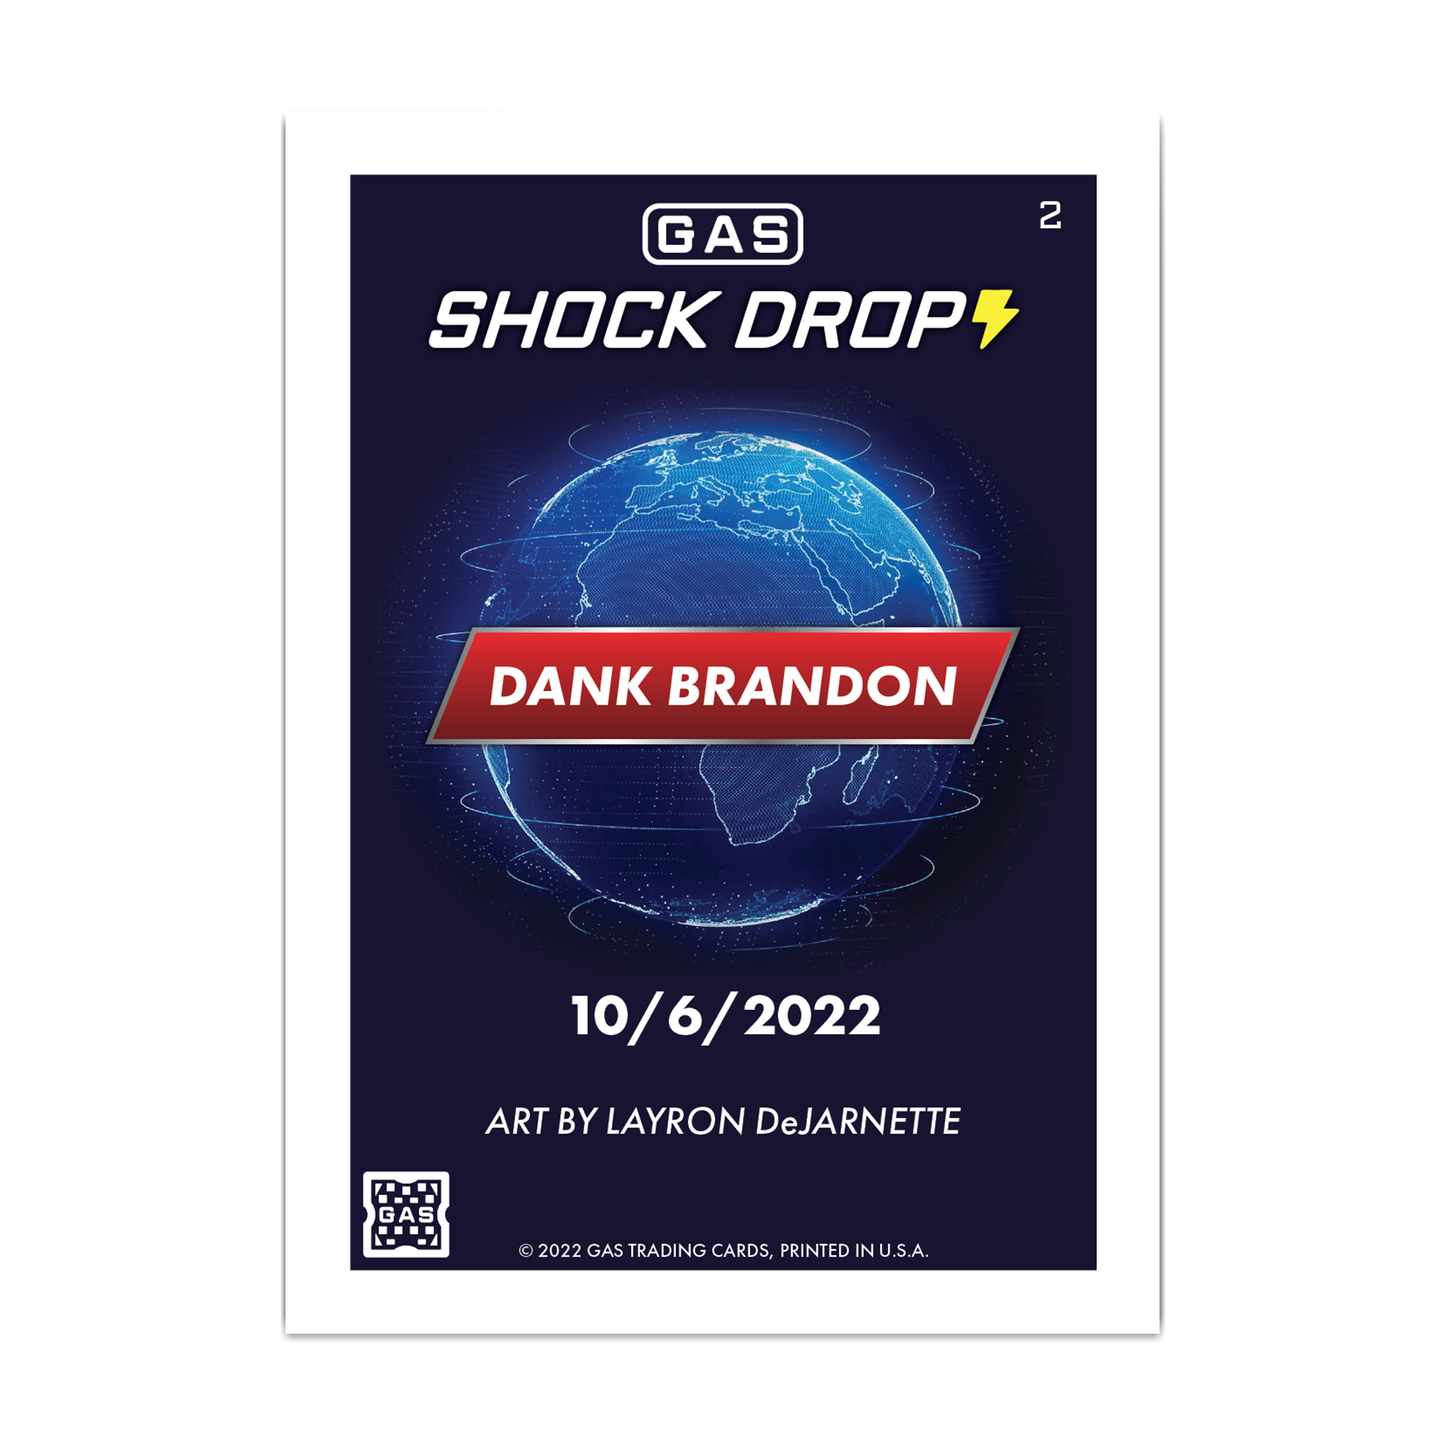 GAS Shock Drop #2 Dank Brandon by Layron DeJarnette Limited Edition Magma Foil Card